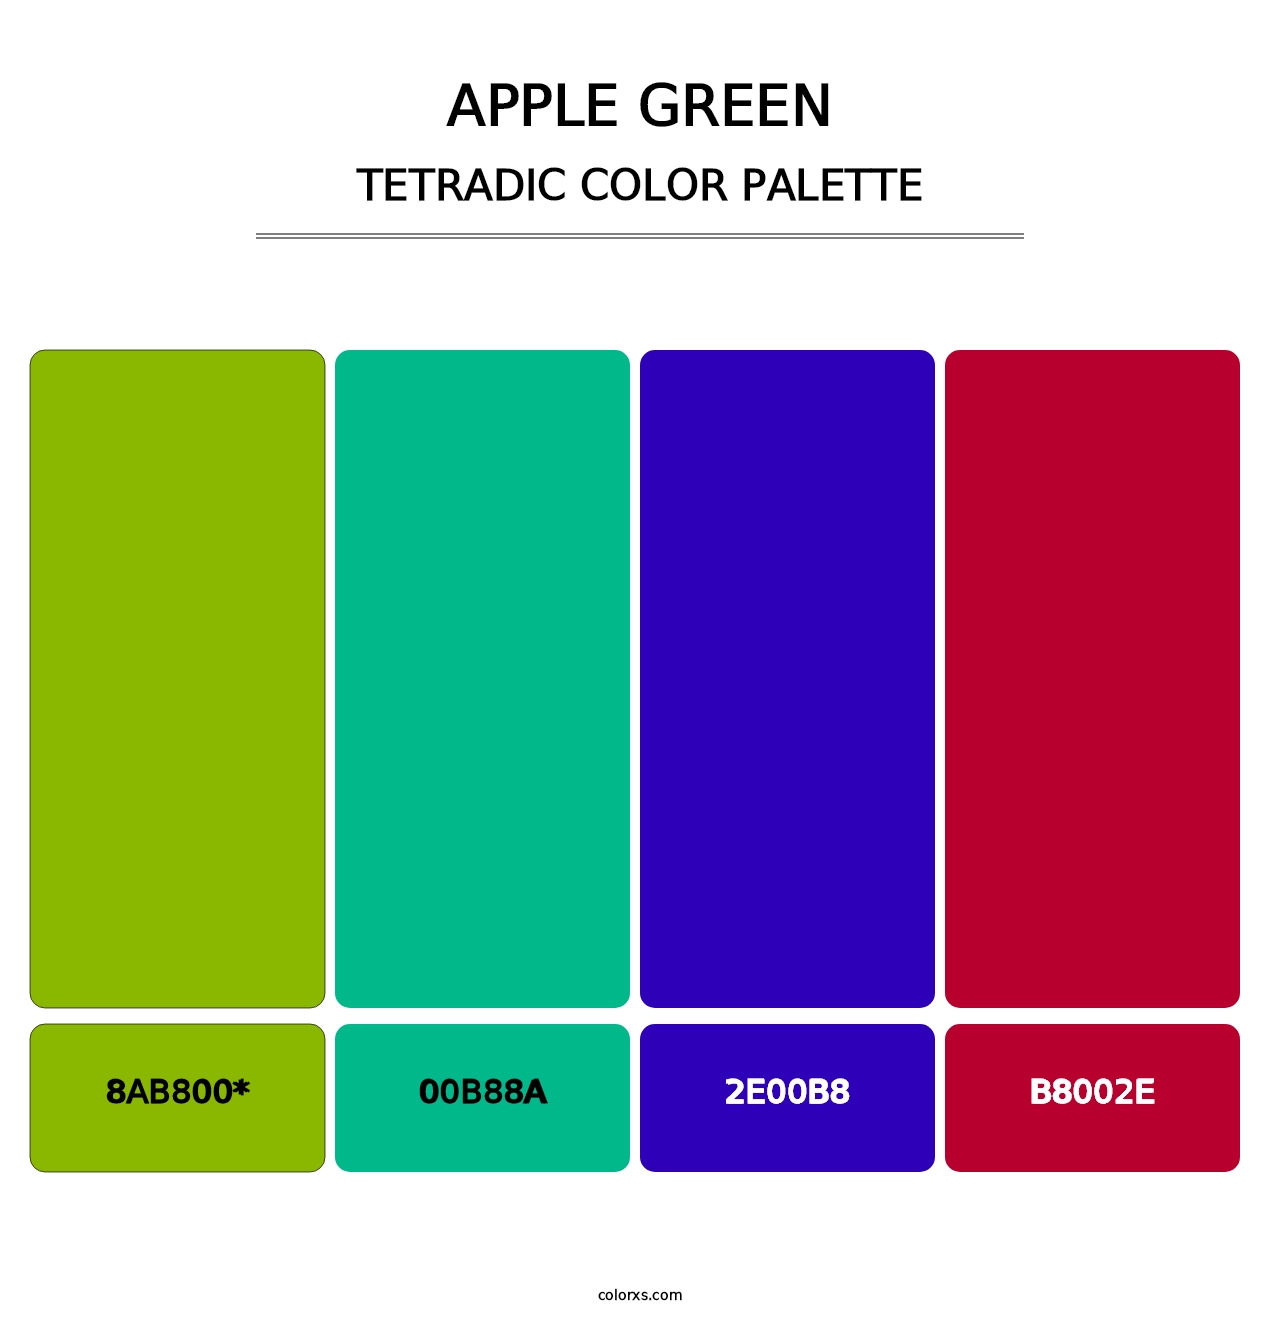 Apple Green - Tetradic Color Palette